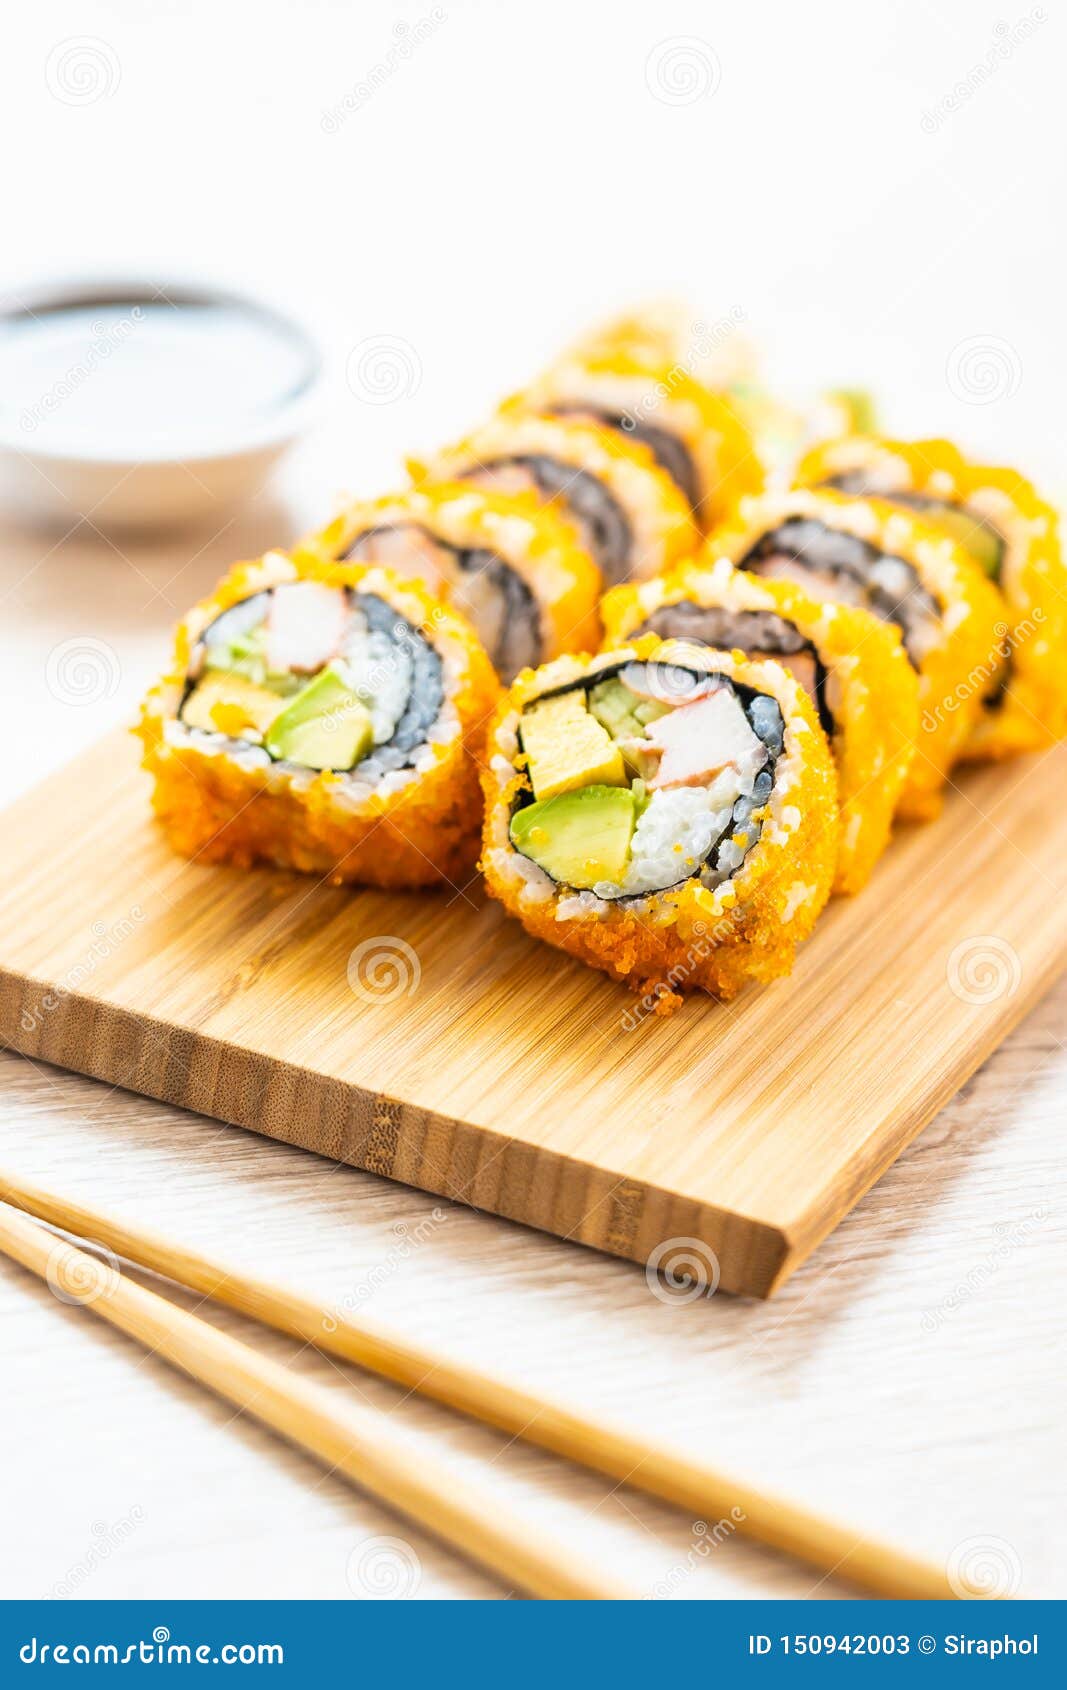 California Maki Rolls Sushi Stock Image - Image of maki, lunch: 150942003